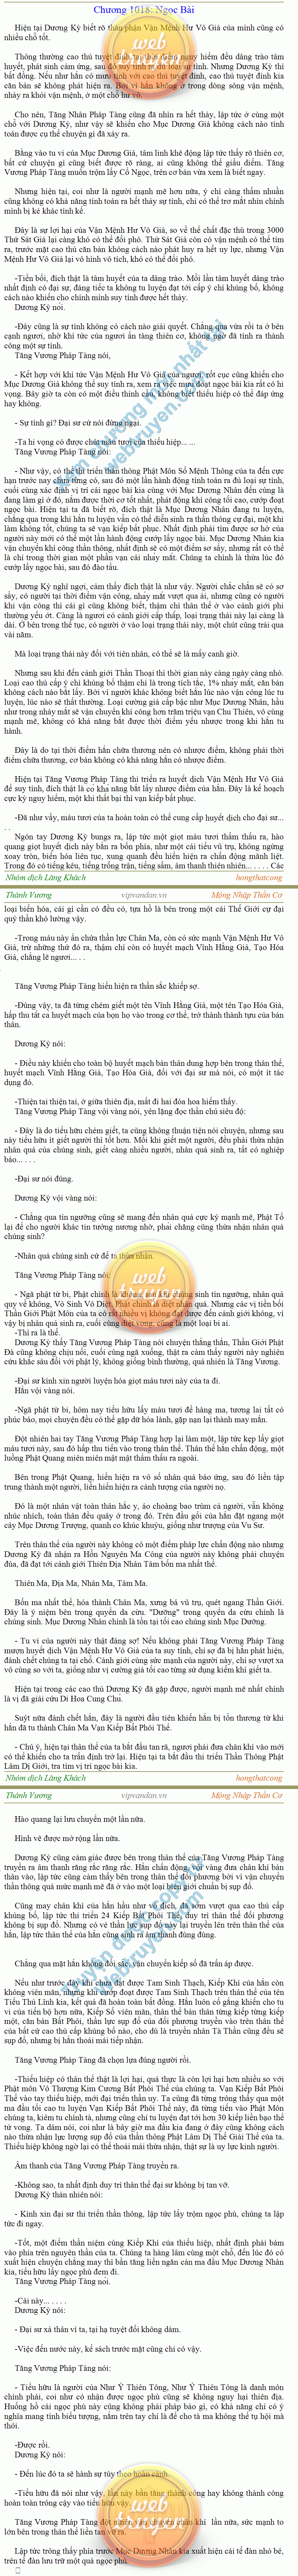 Thanh-vuong-1018.png